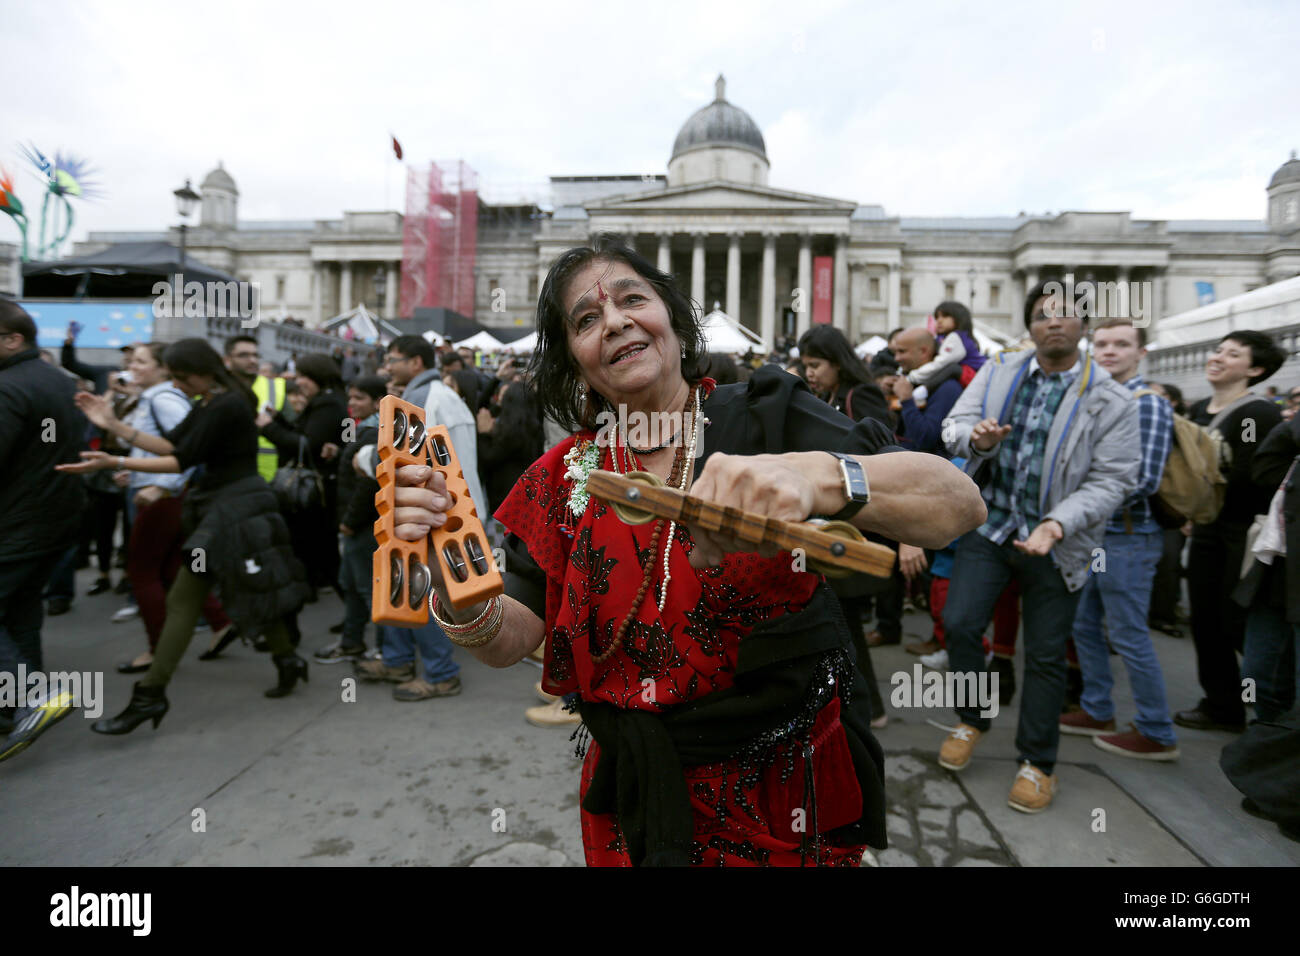 Revellers celebrate Diwali with traditional Garba dancing in Trafalgar Square, central London. Stock Photo